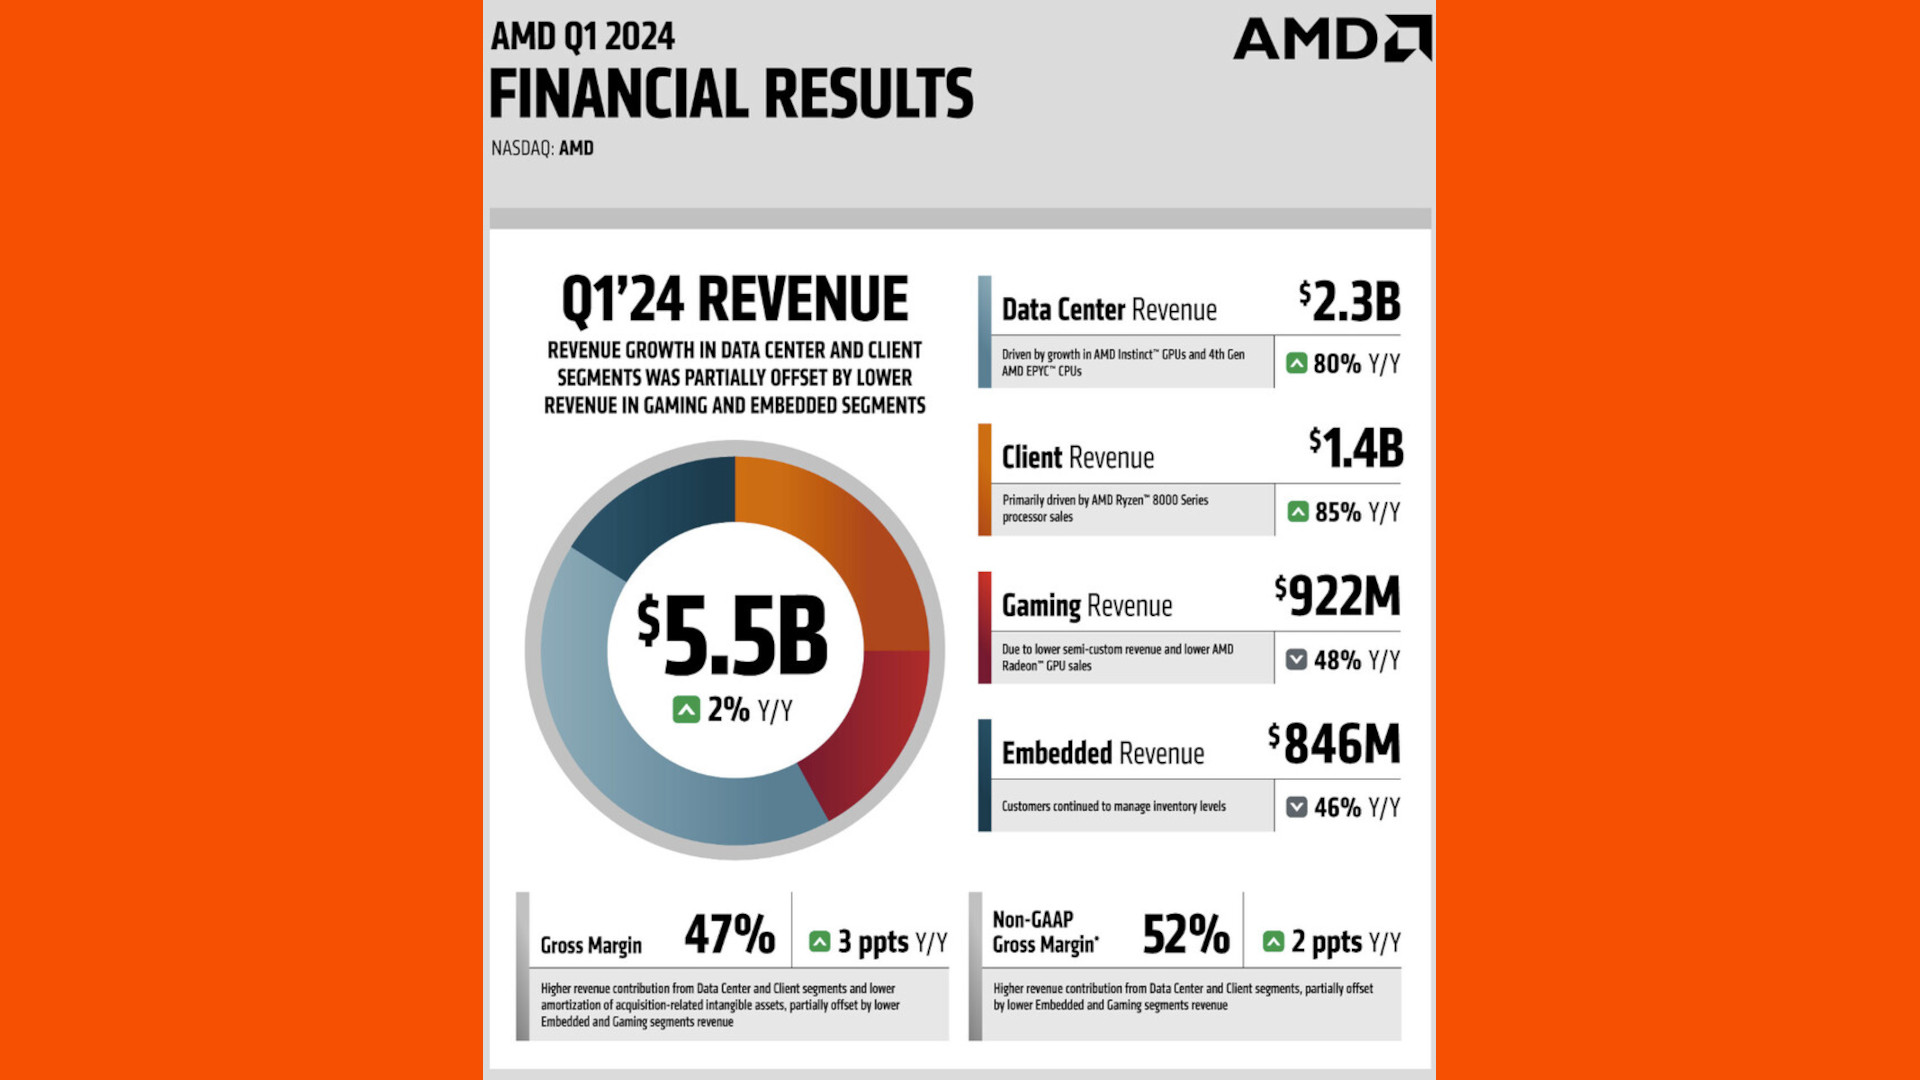 A graph breaking down AMD's Q1 2024 revenue